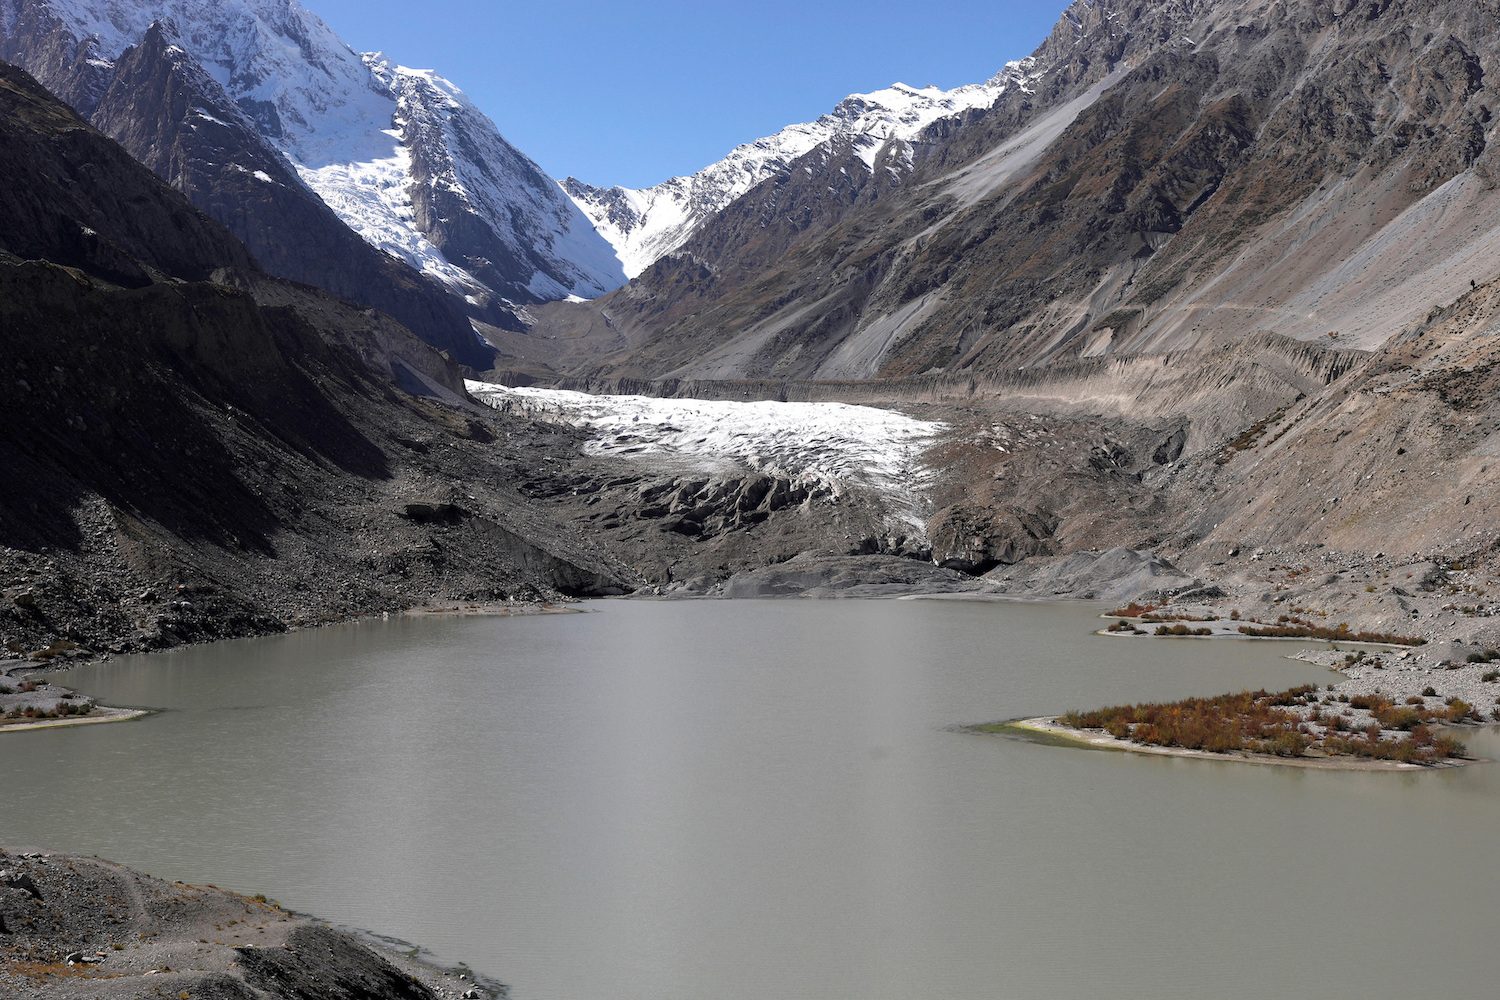 Pakistan mountain villages fight for future as melting glaciers threaten floods